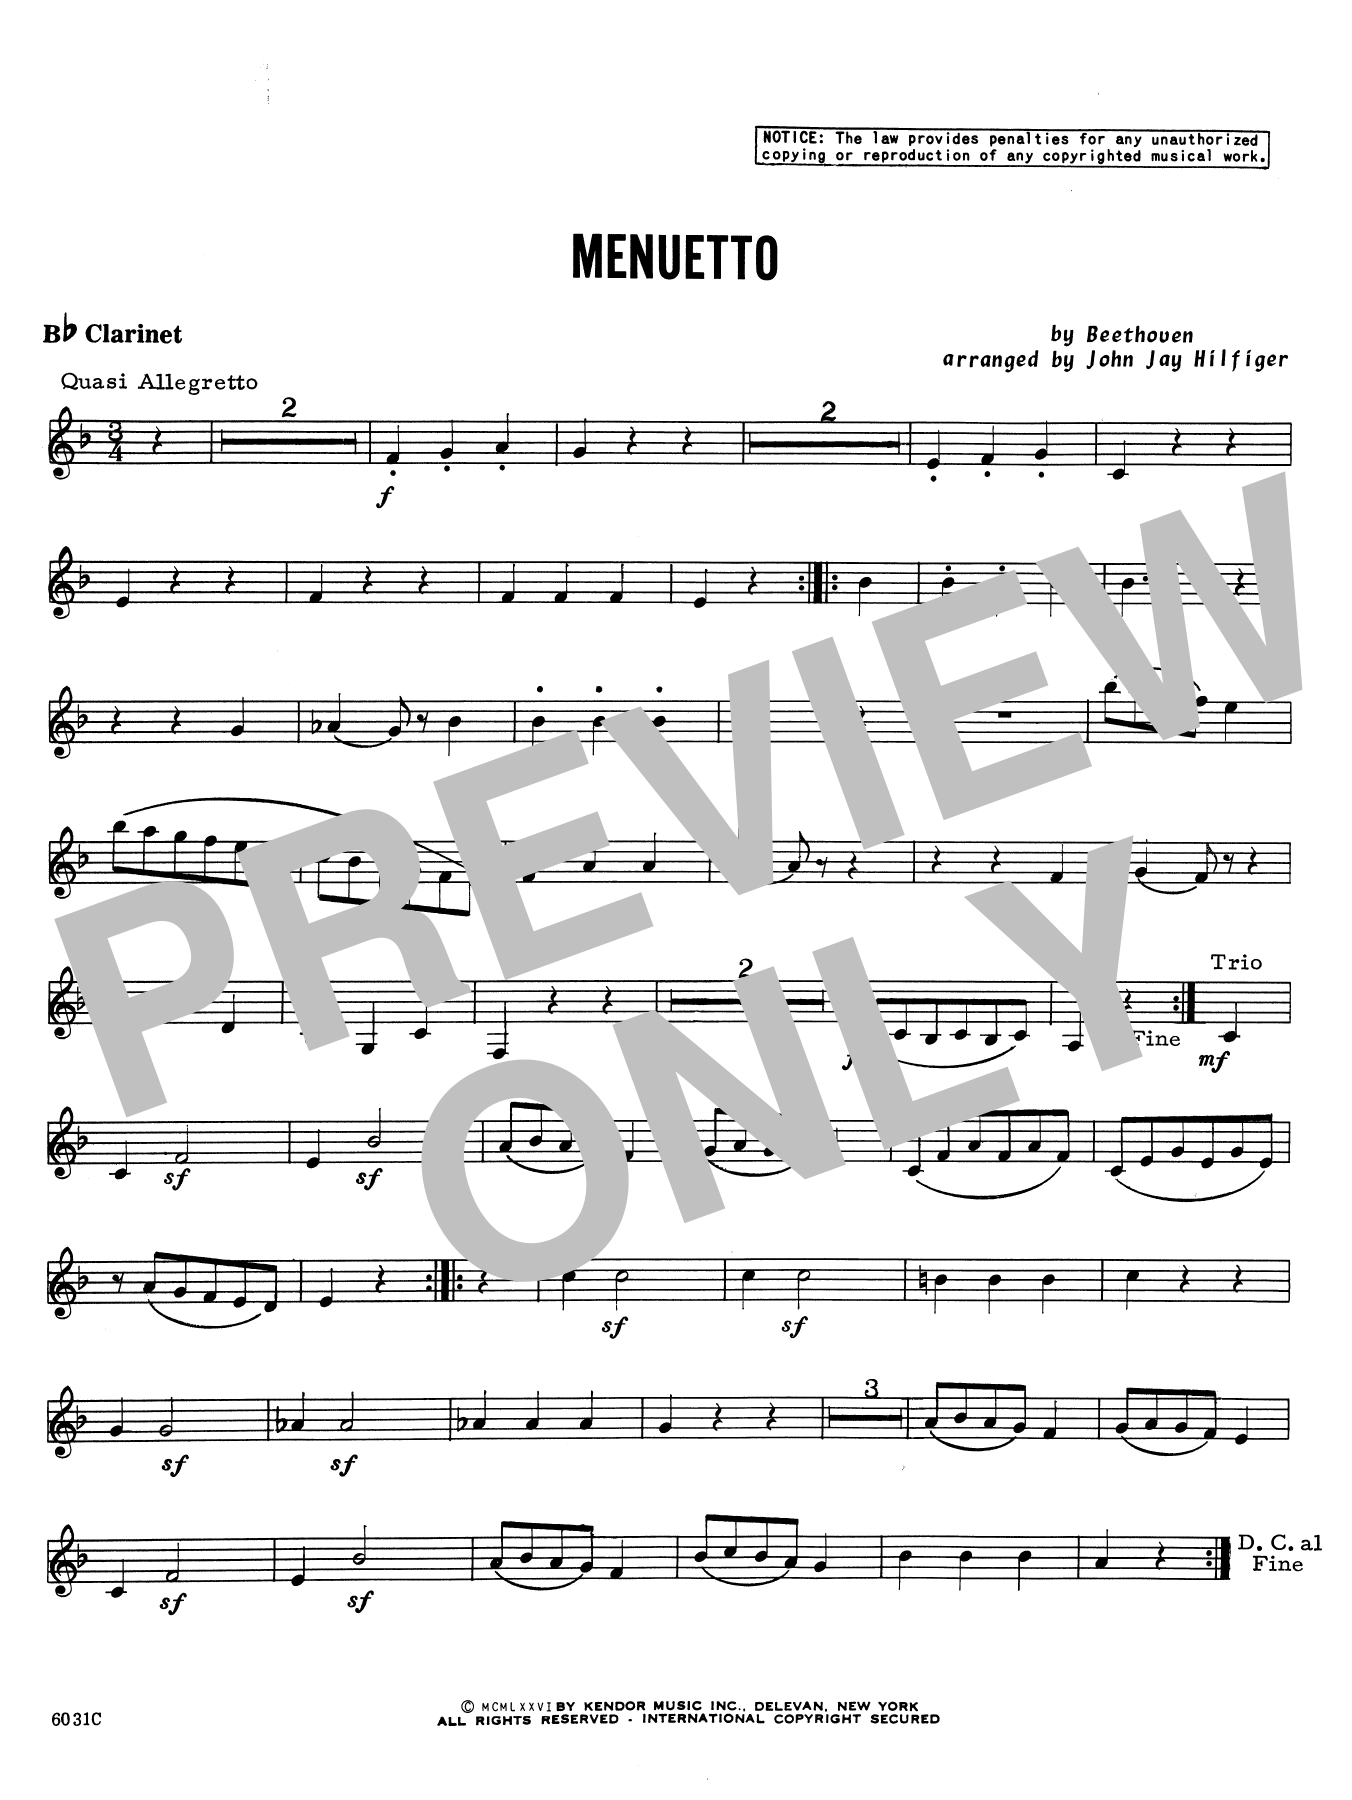 Download John Jay Hilfiger Menuetto - Bb Clarinet Sheet Music